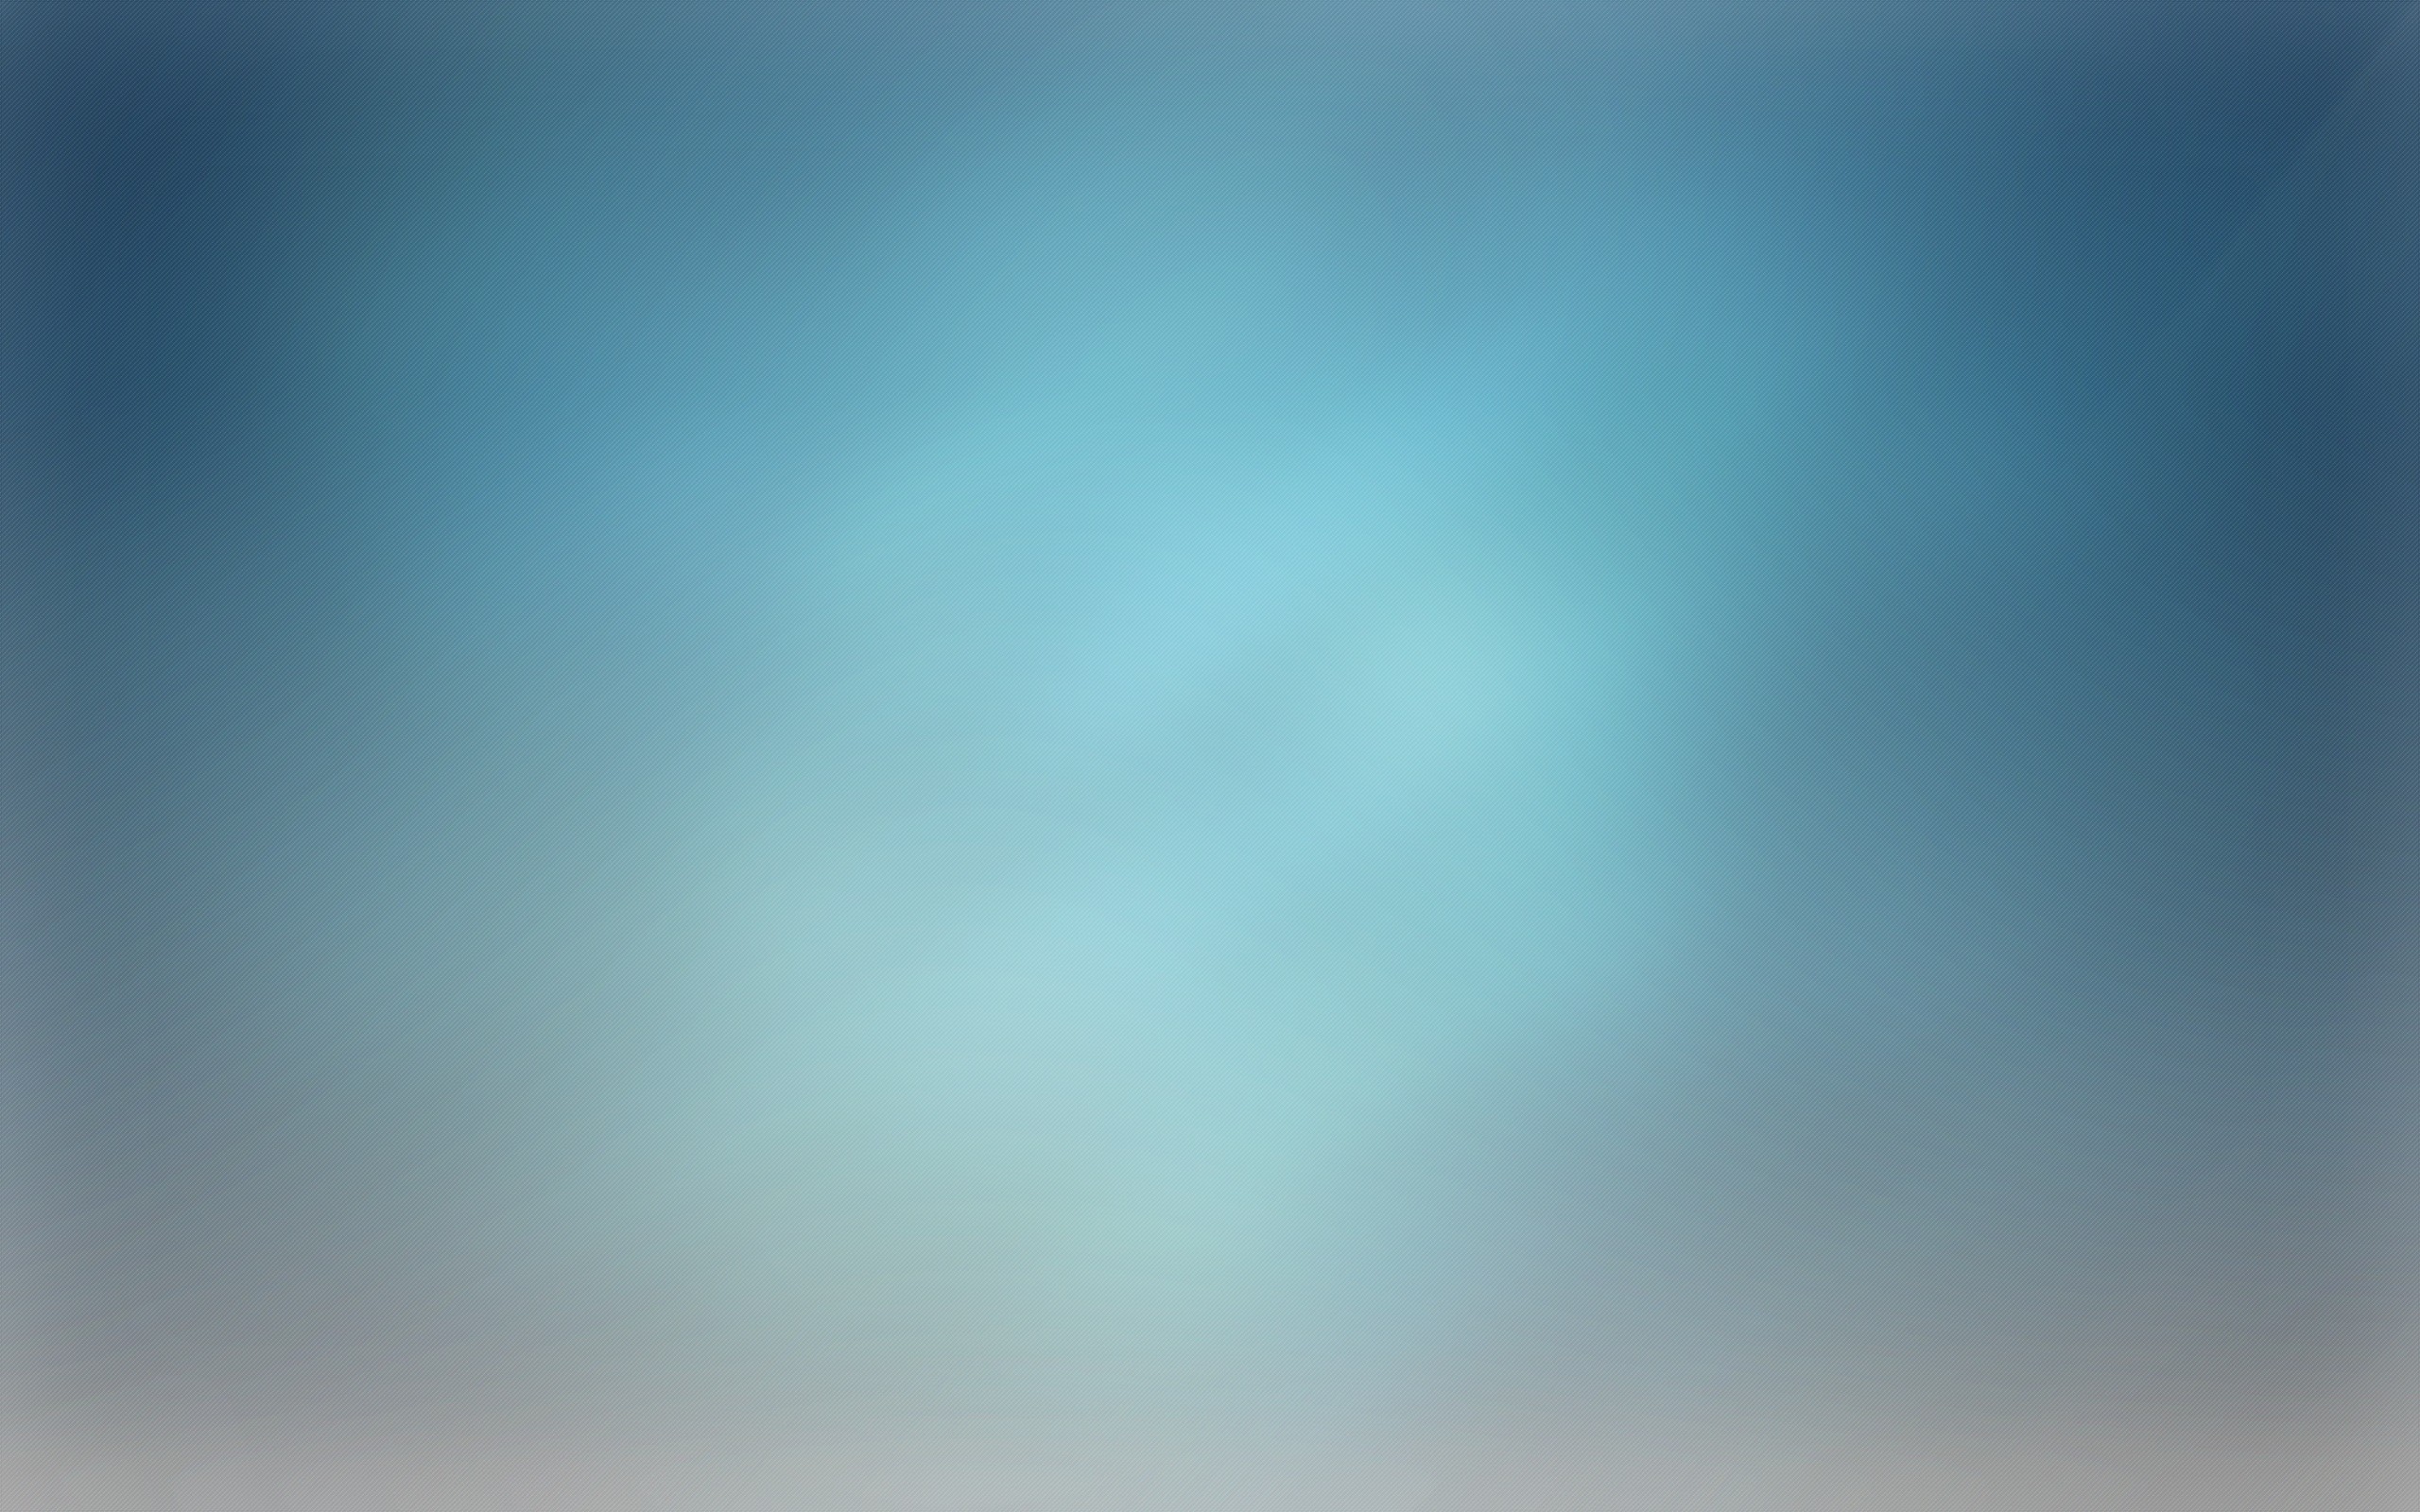 General 2560x1600 gradient minimalism digital art blue texture blue background simple background